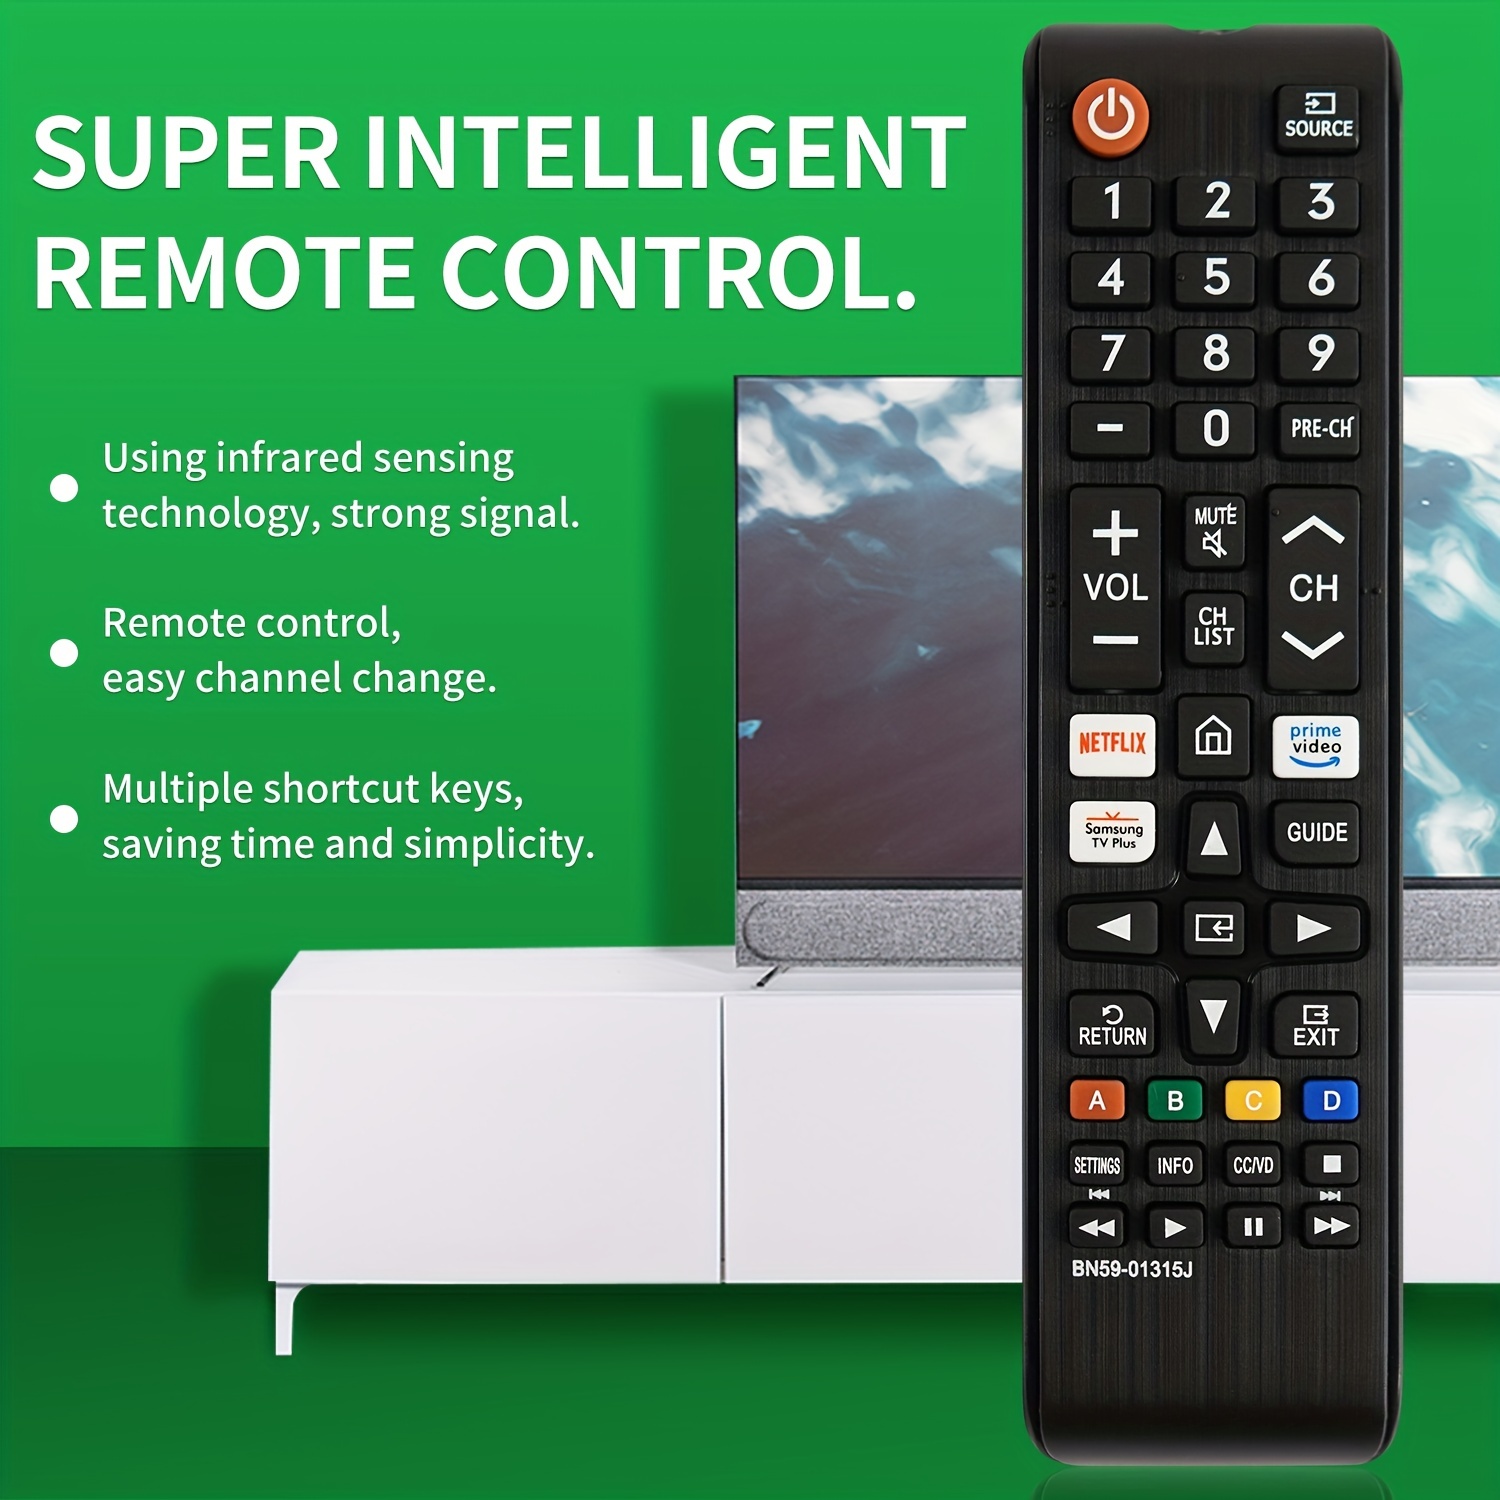 Smart TV - Samsung TV Plus